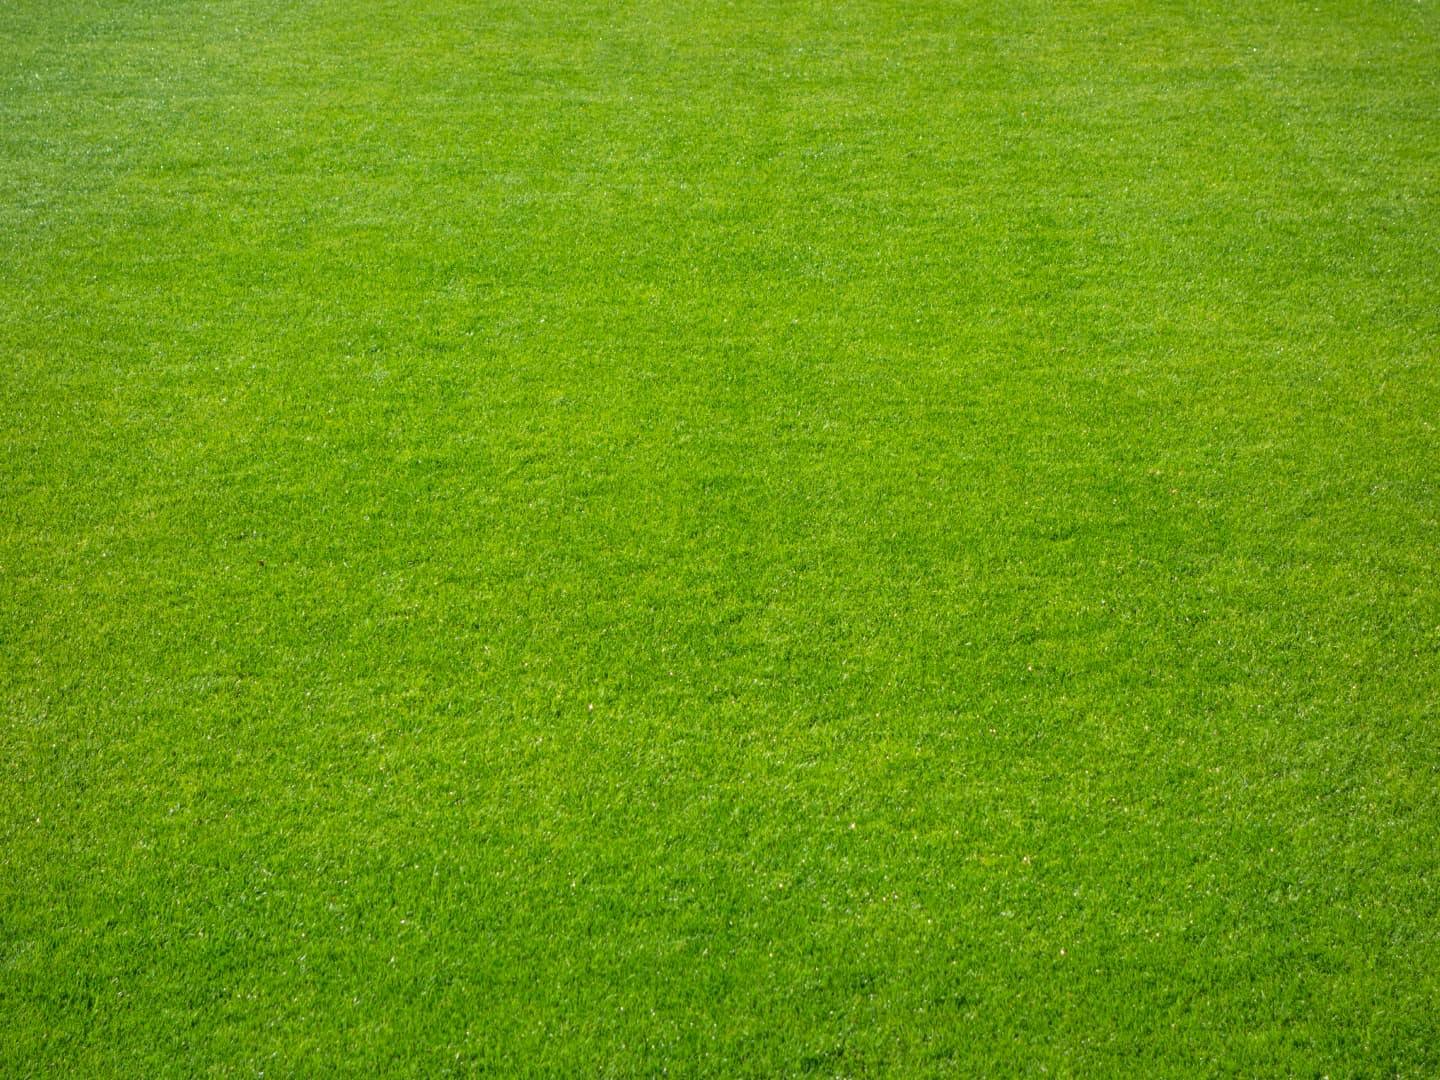 Fußball-Rasen in Nahaufnahme